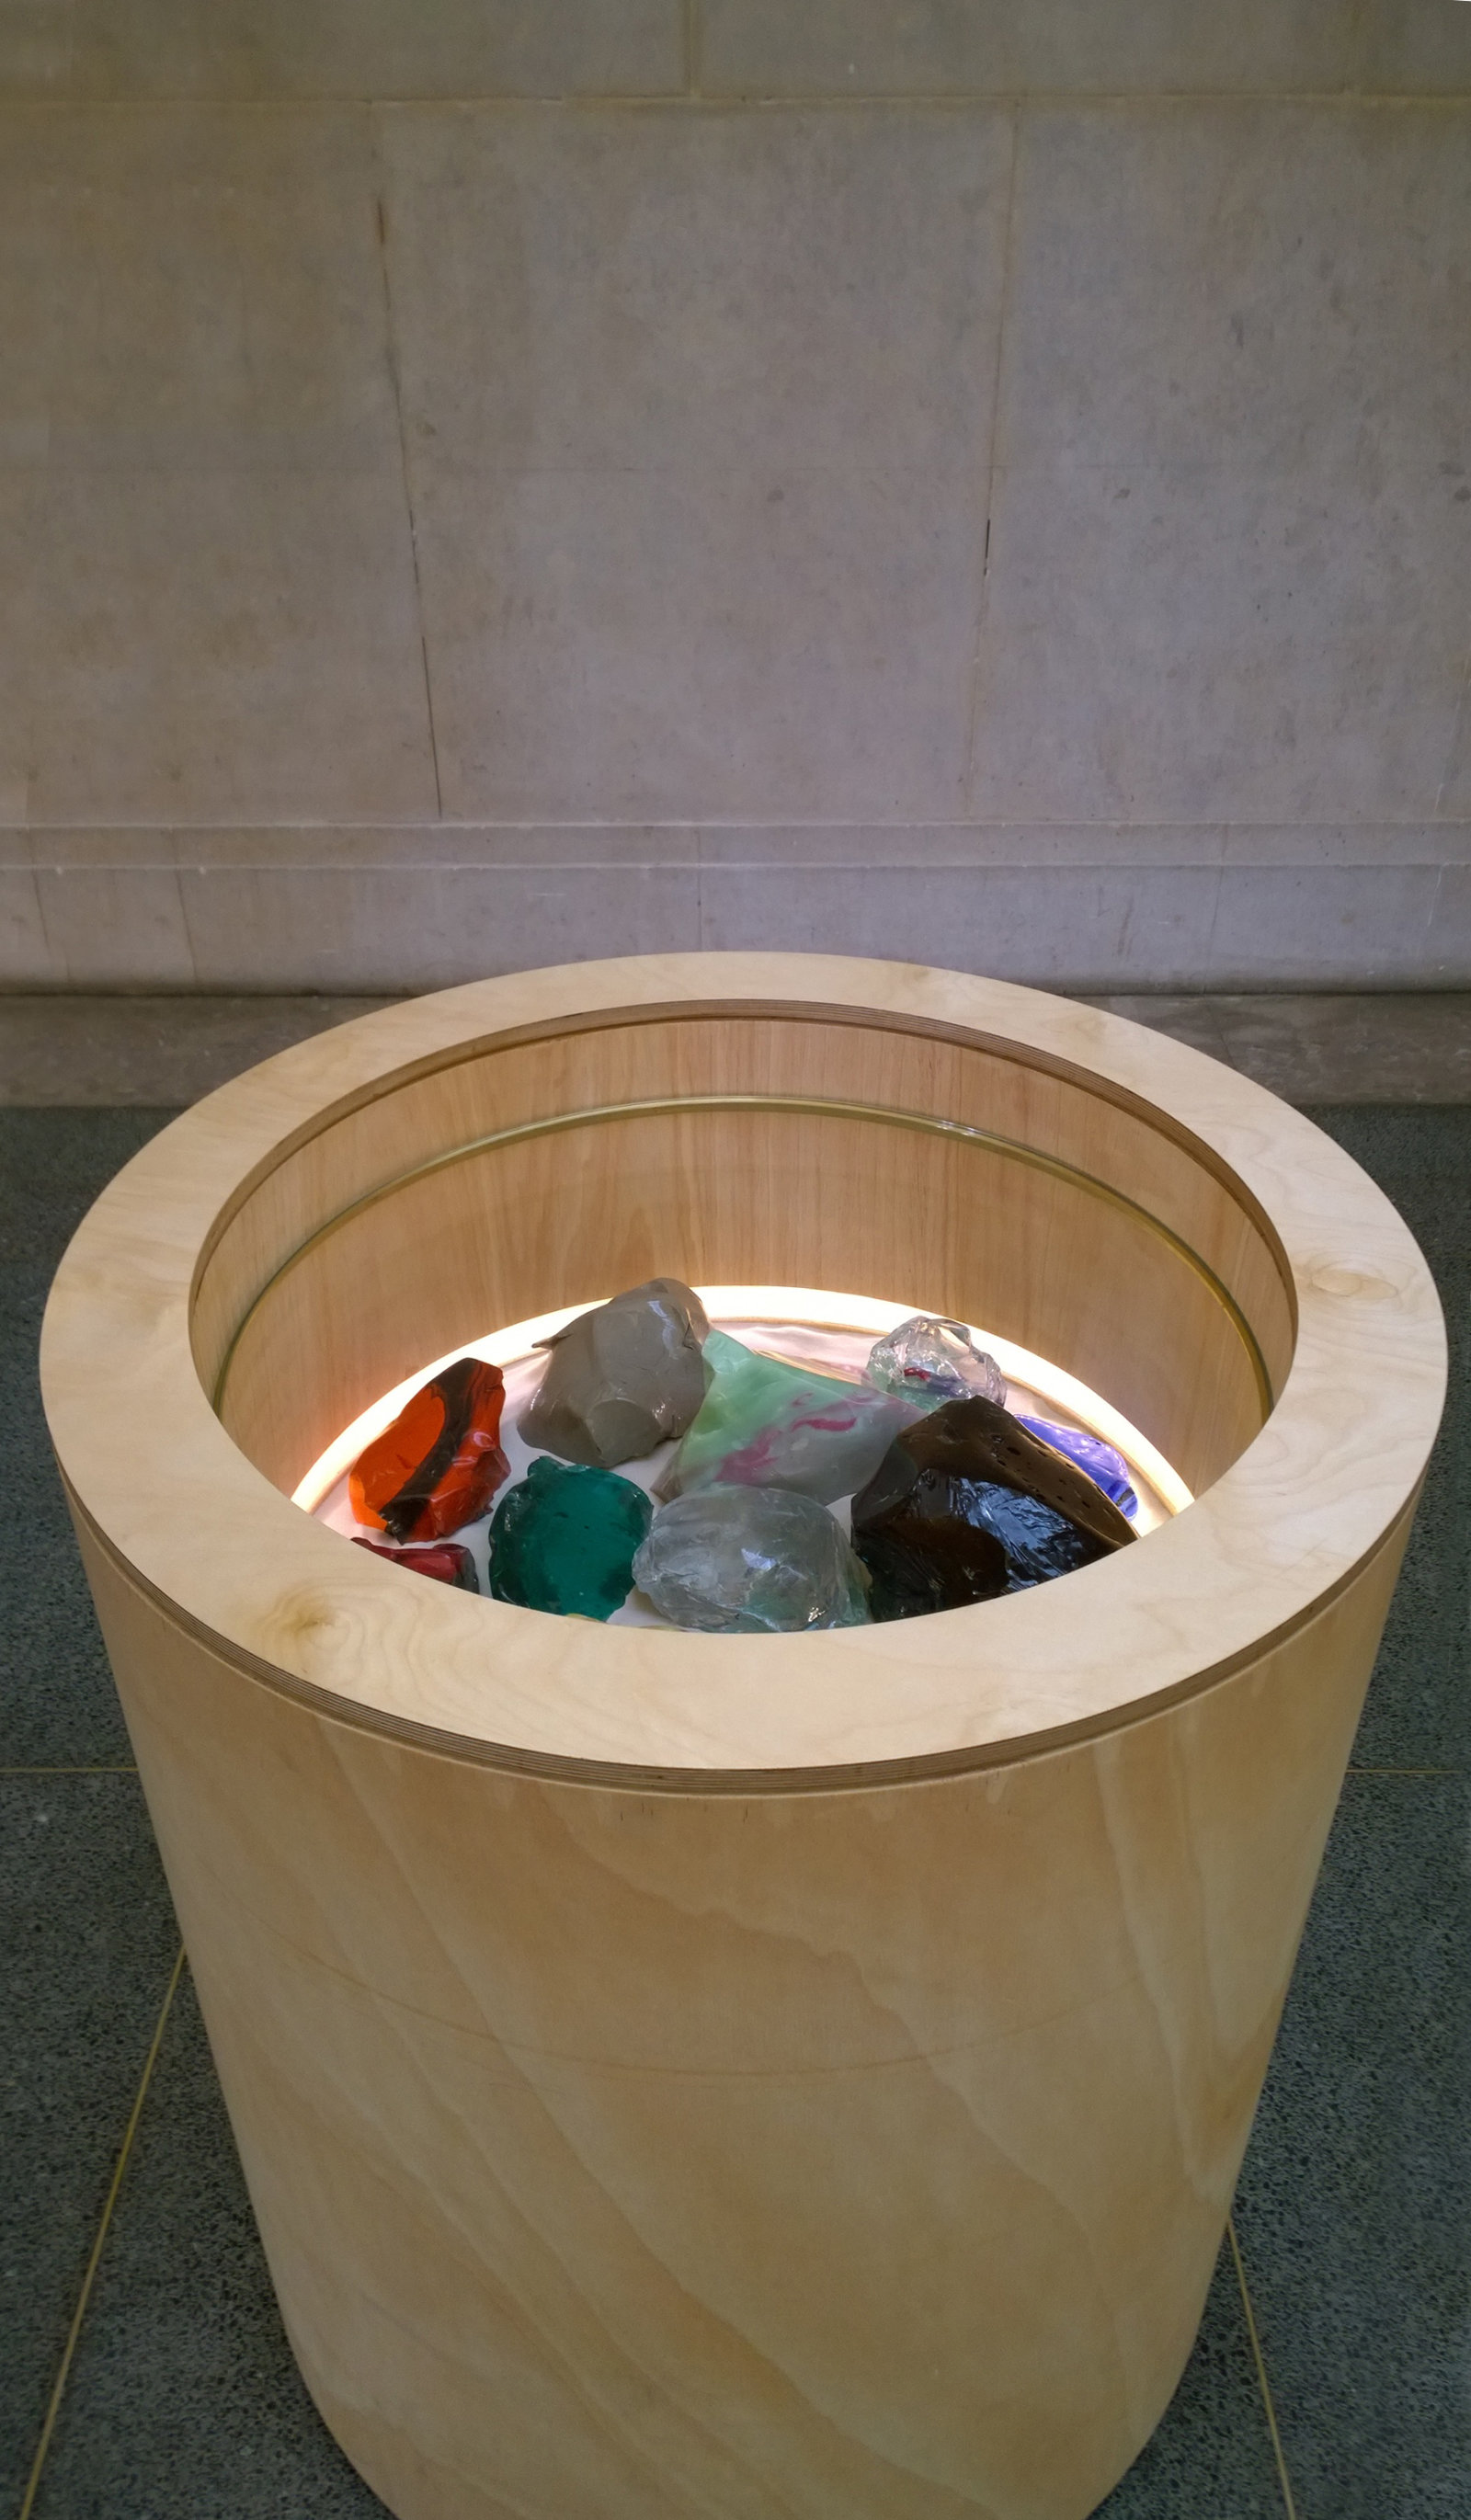 Christina Mackie, Cullet bin, 2015, wood, sand, glass, amiran, brass, batteries, led lights, lock, 46 x 38 x 38 in. (118 x 97 x 97 cm). Installation view, the filters, Tate Britain, London, UK, 2015